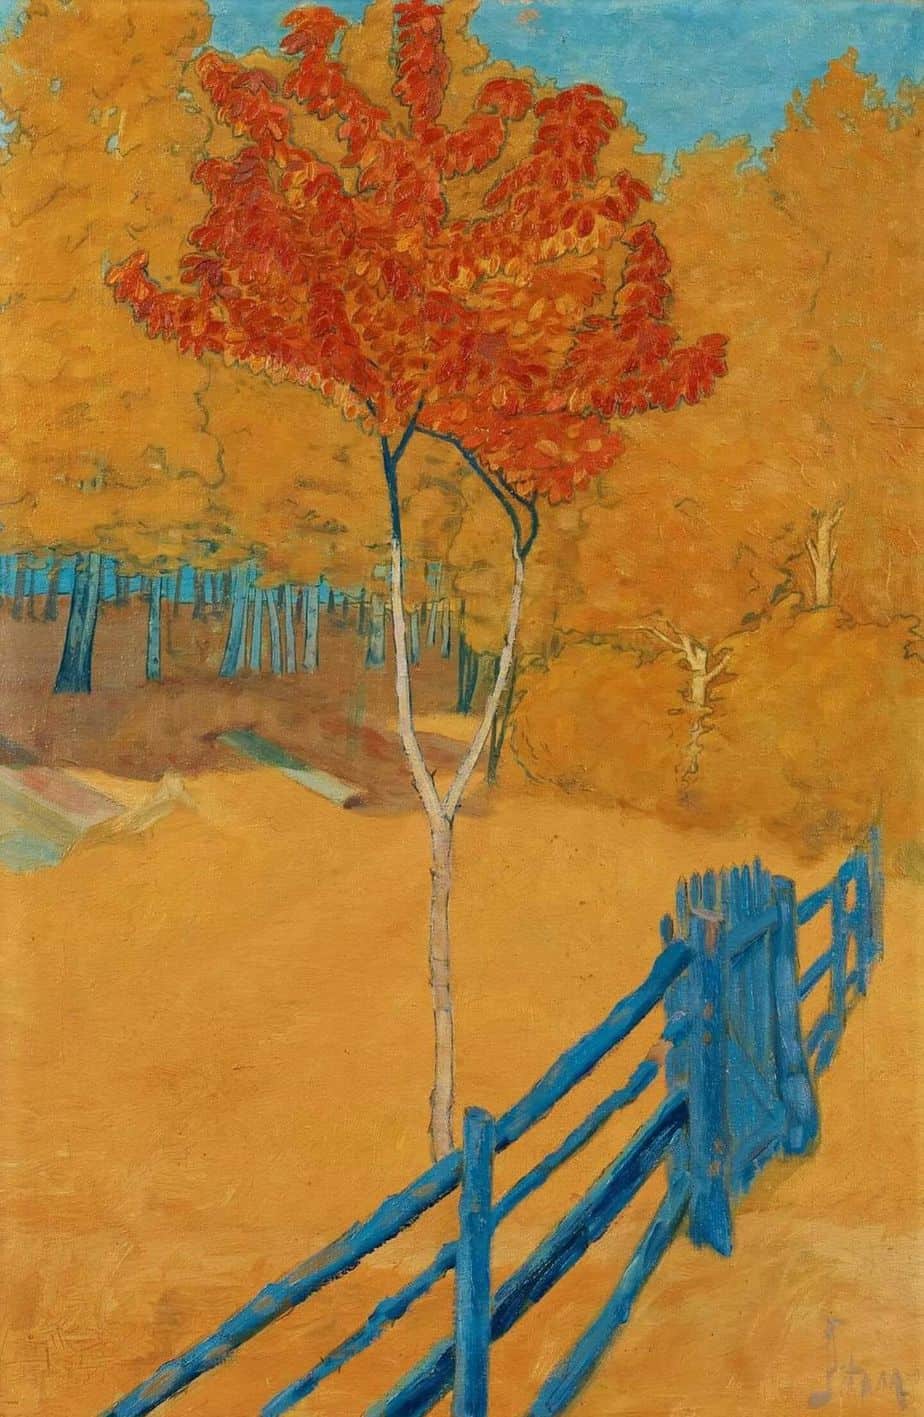 John Sten (1879-1922) Autumn Landscape 1906